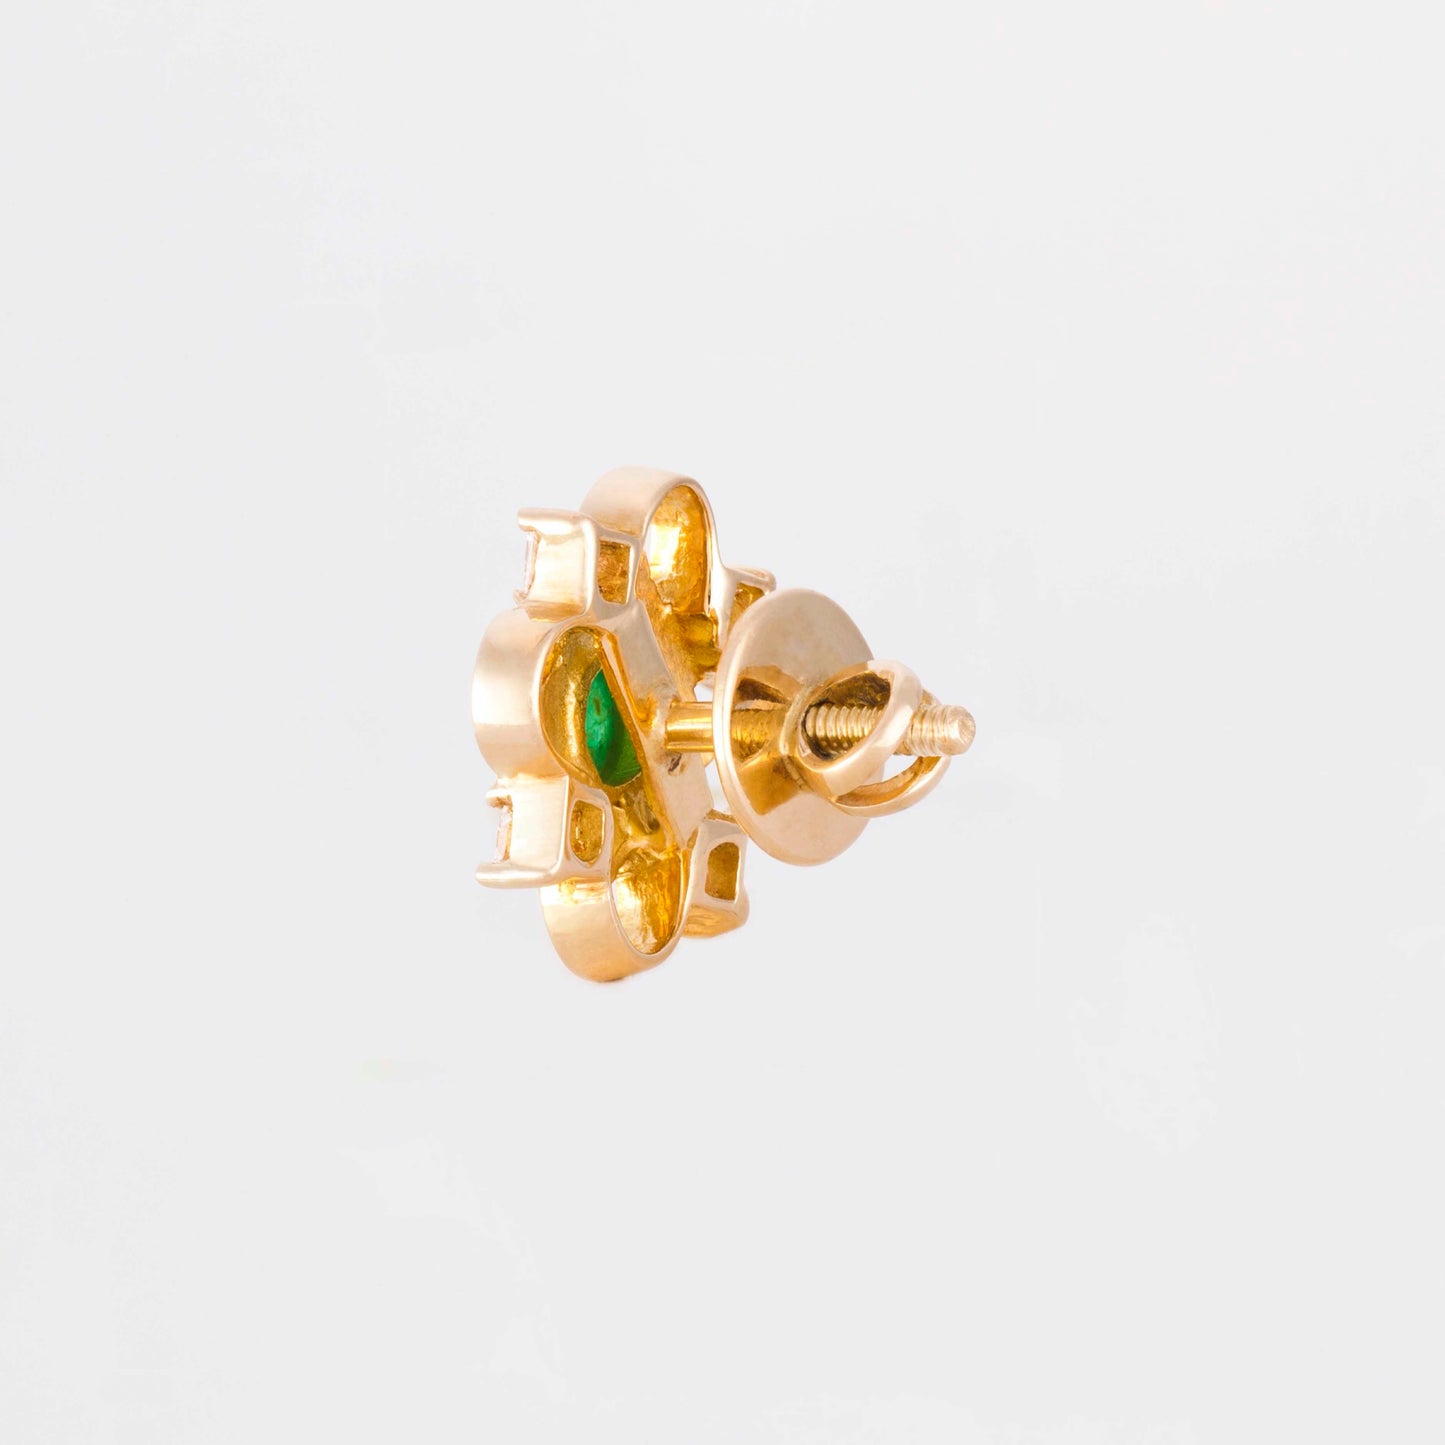 The Tanushri Gold, Emerald and Diamond Ear Studs by Rasvihar